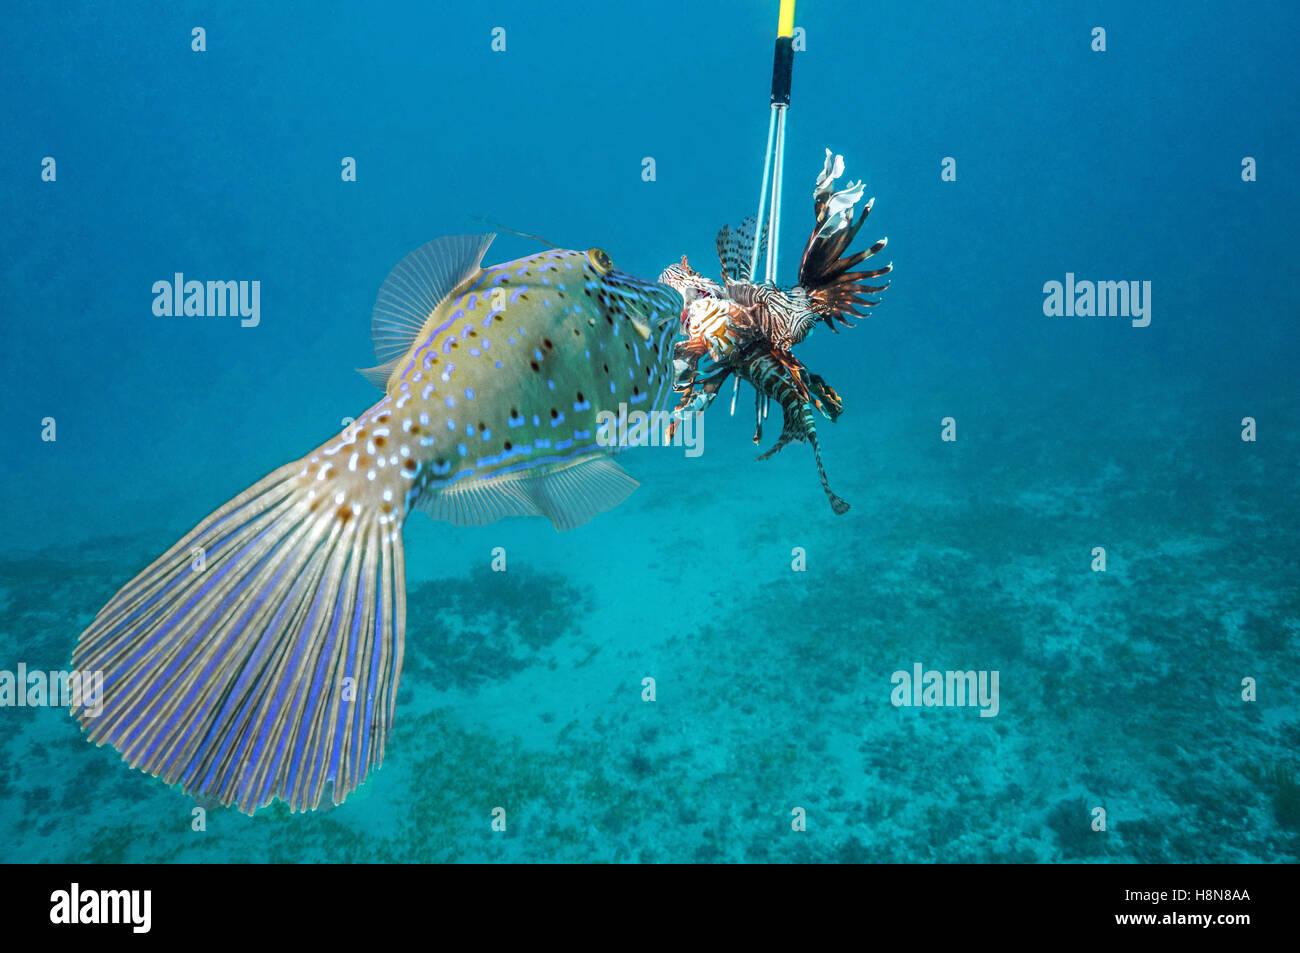 filefish eating lionfish on spear Stock Photo